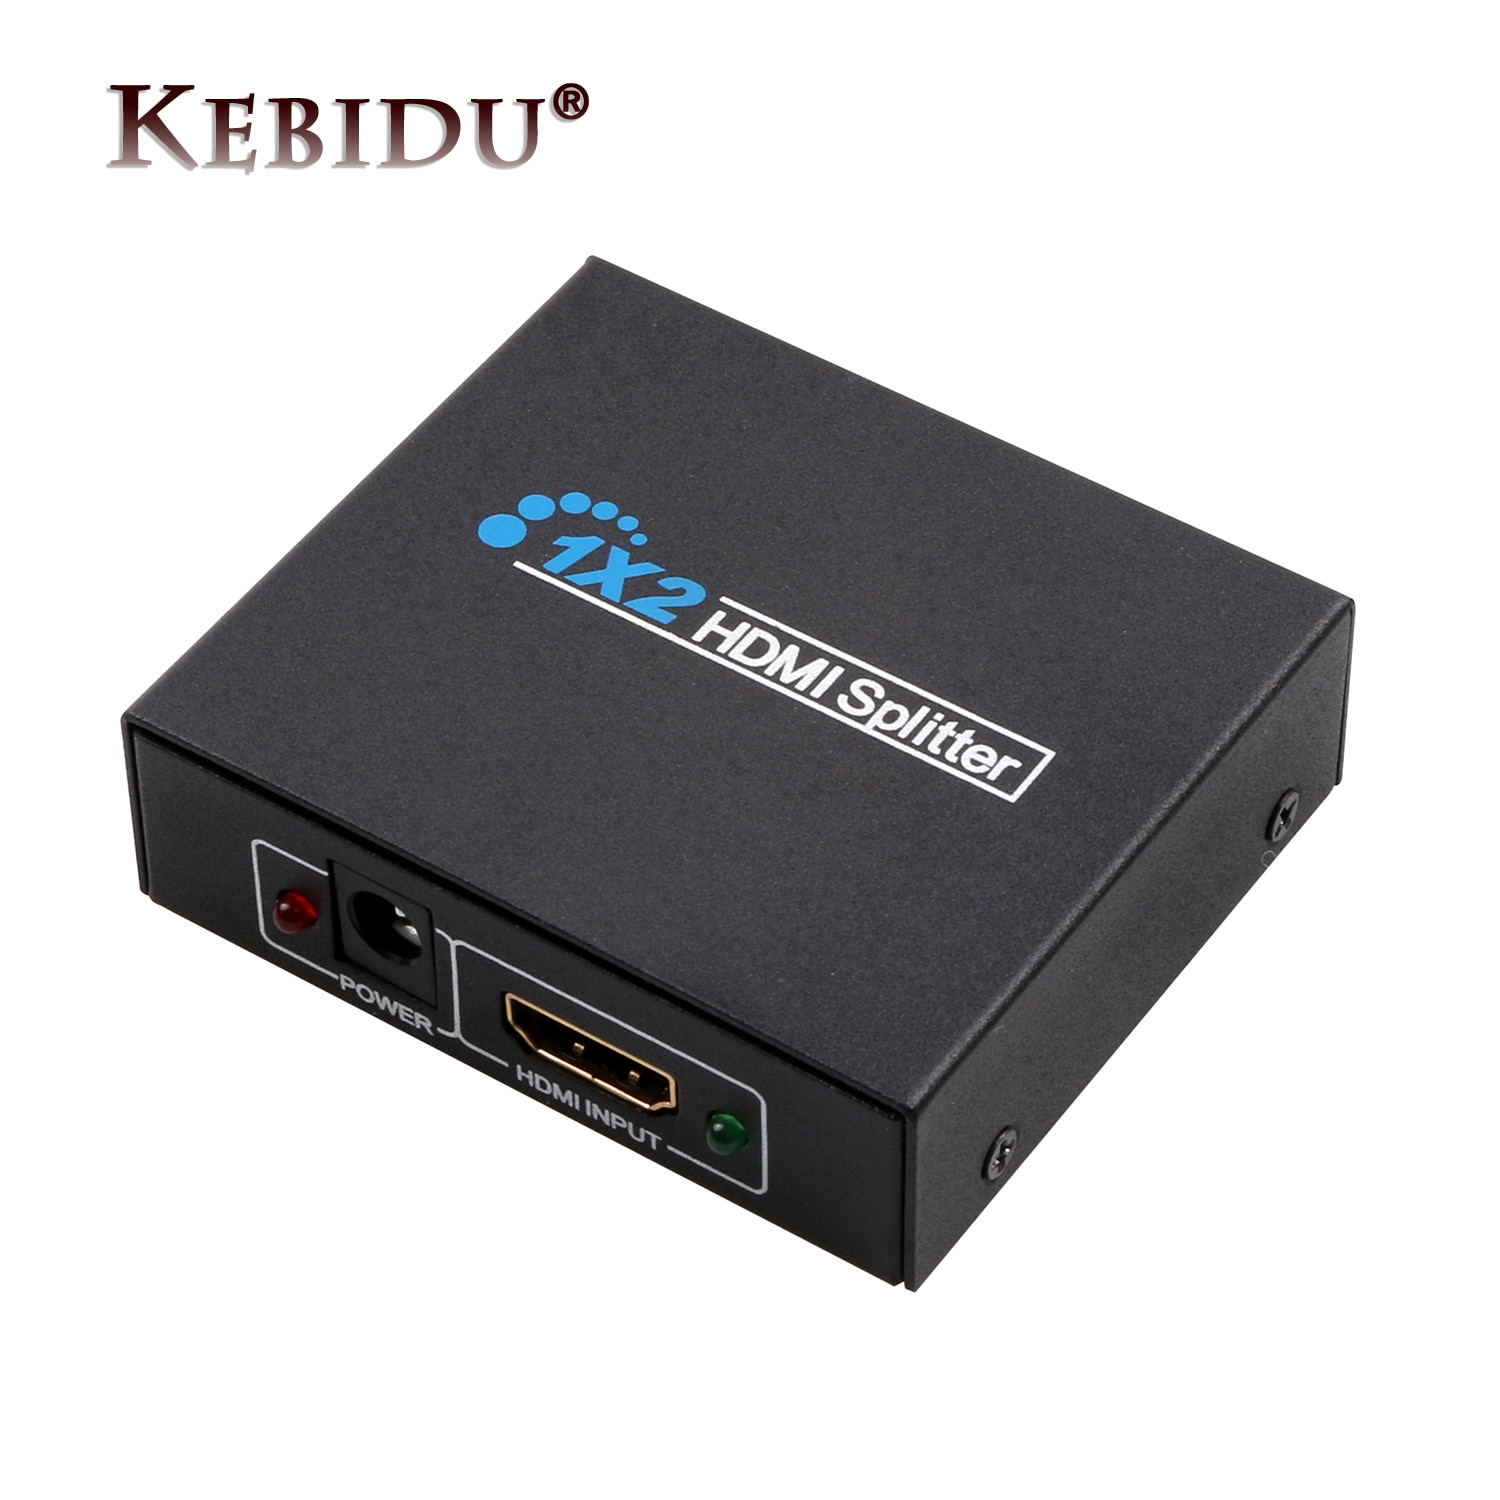 Hd 1080P Splitter Video Hdmi-Compatibel Switcher 1X2 Splitter Box Adapter Voor Dvd Projector Dlp lcd Xbox Hdtv